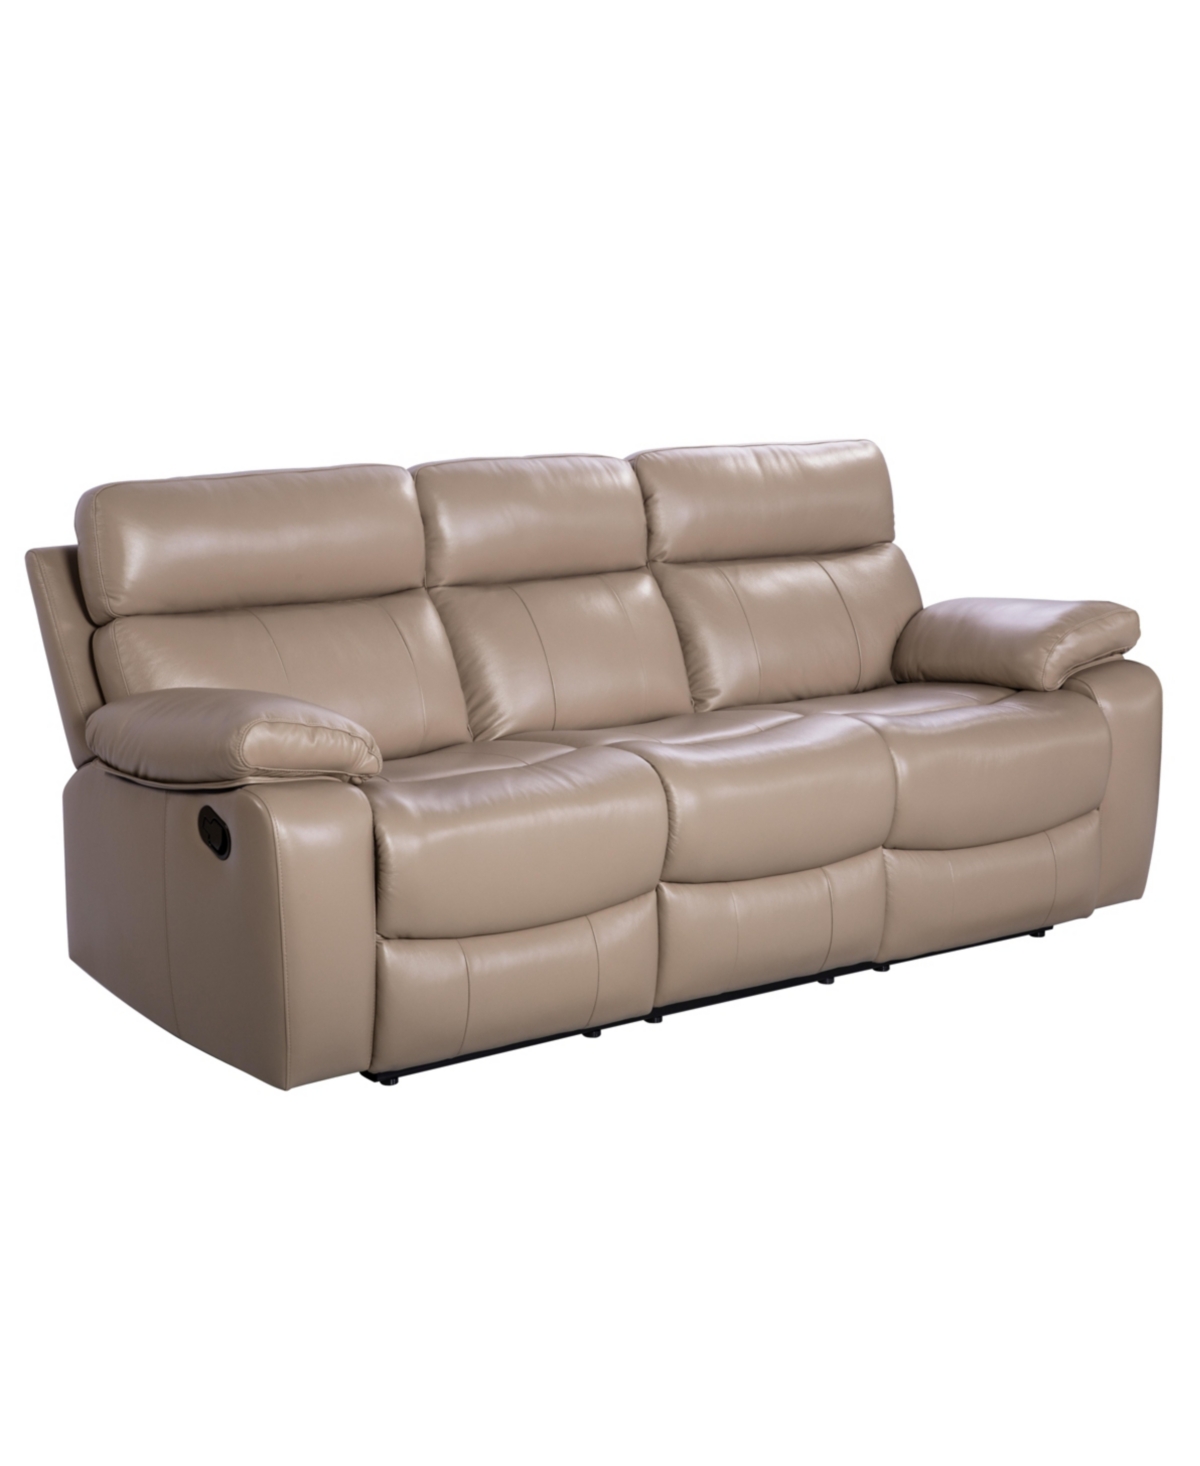 Alexander 87 Leather Recliner Sofa